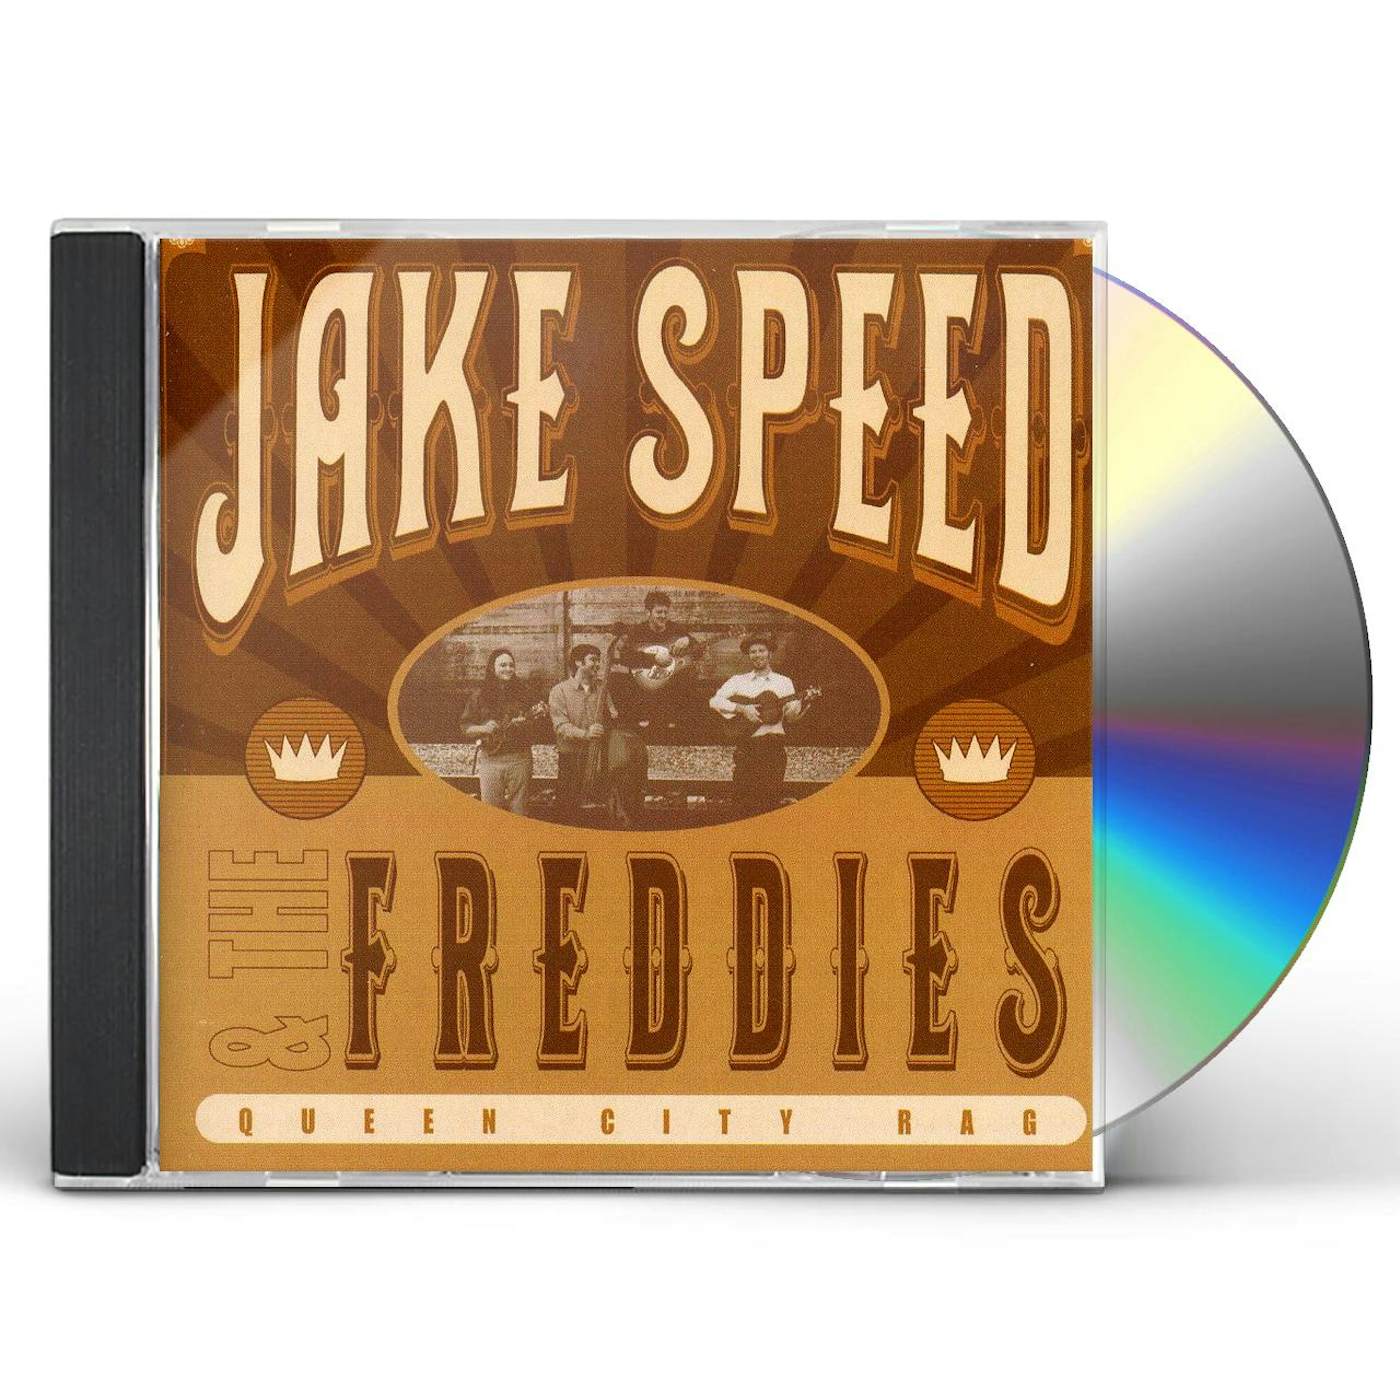 Jake Speed & the Freddies QUEEN CITY RAG CD